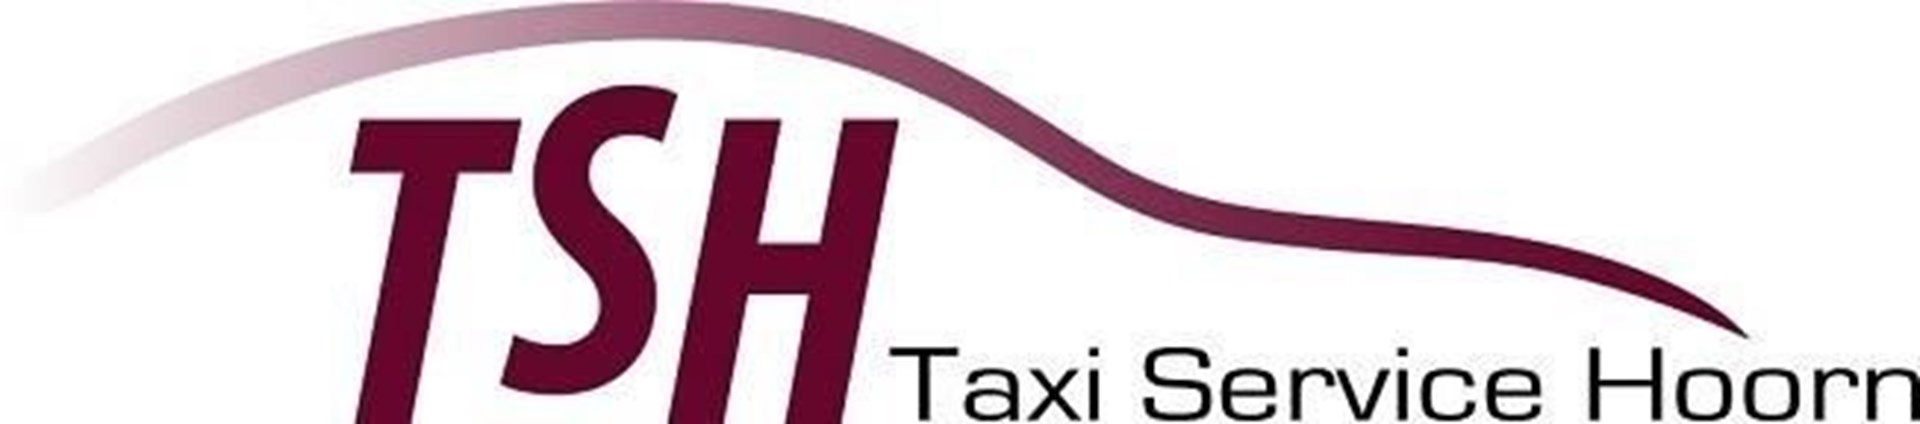 Taxi Service Hoorn banner